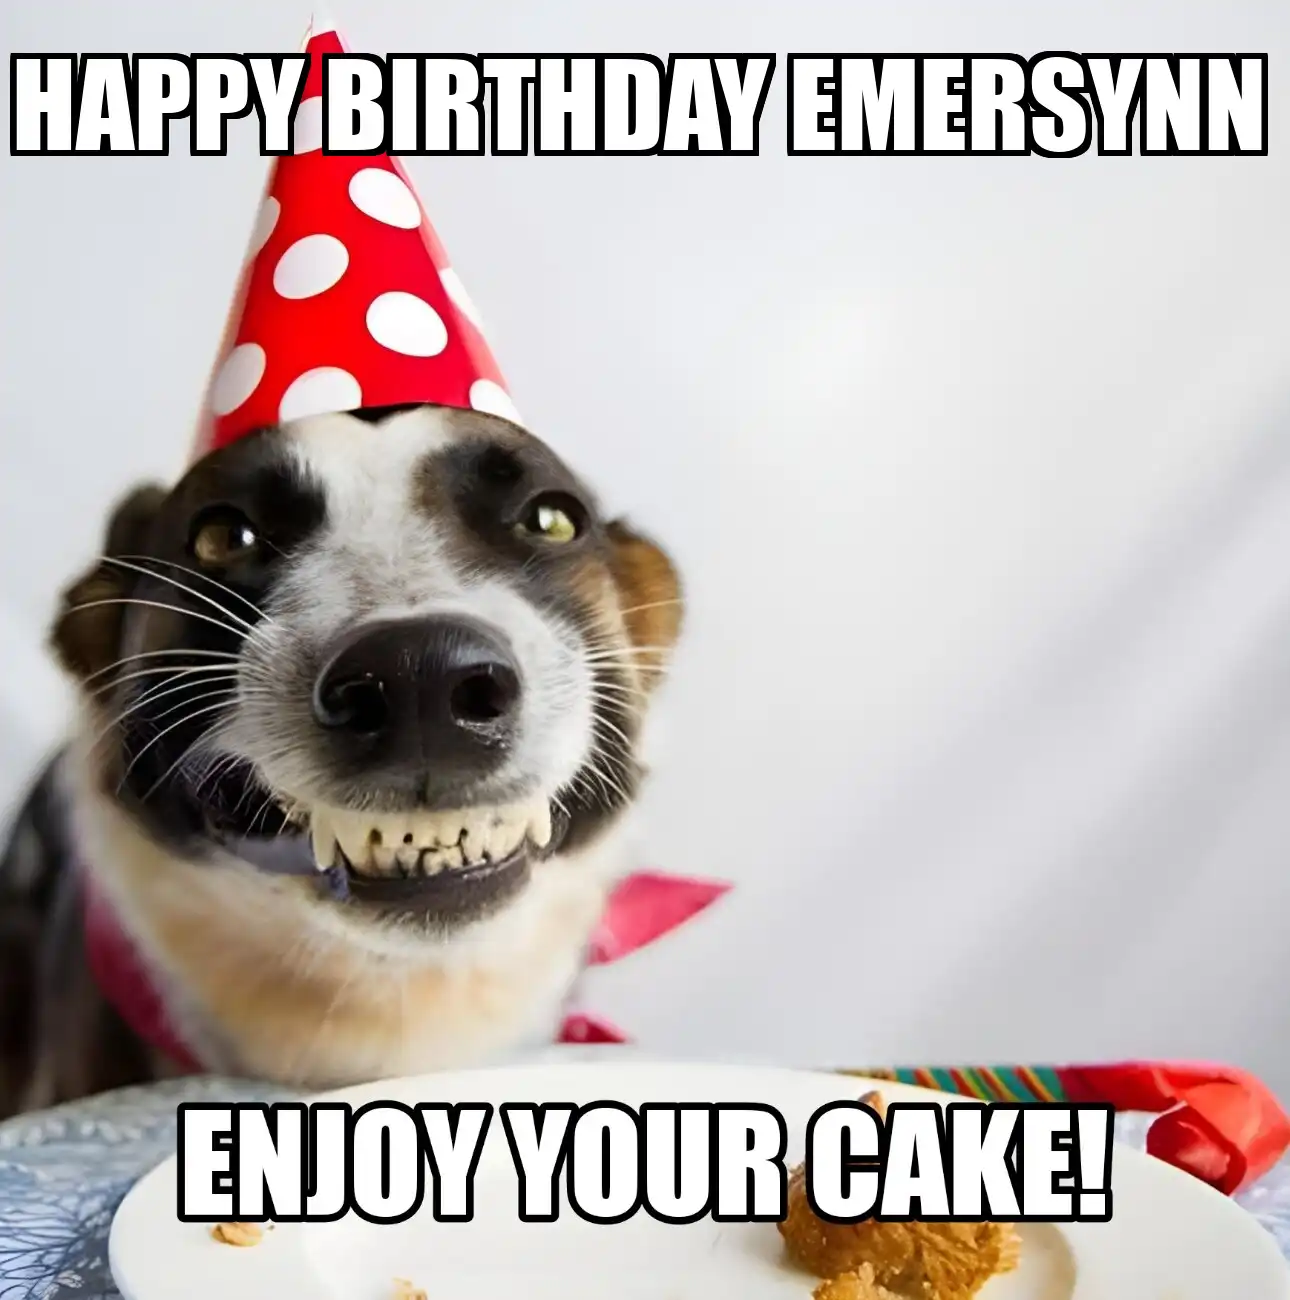 Happy Birthday Emersynn Enjoy Your Cake Dog Meme